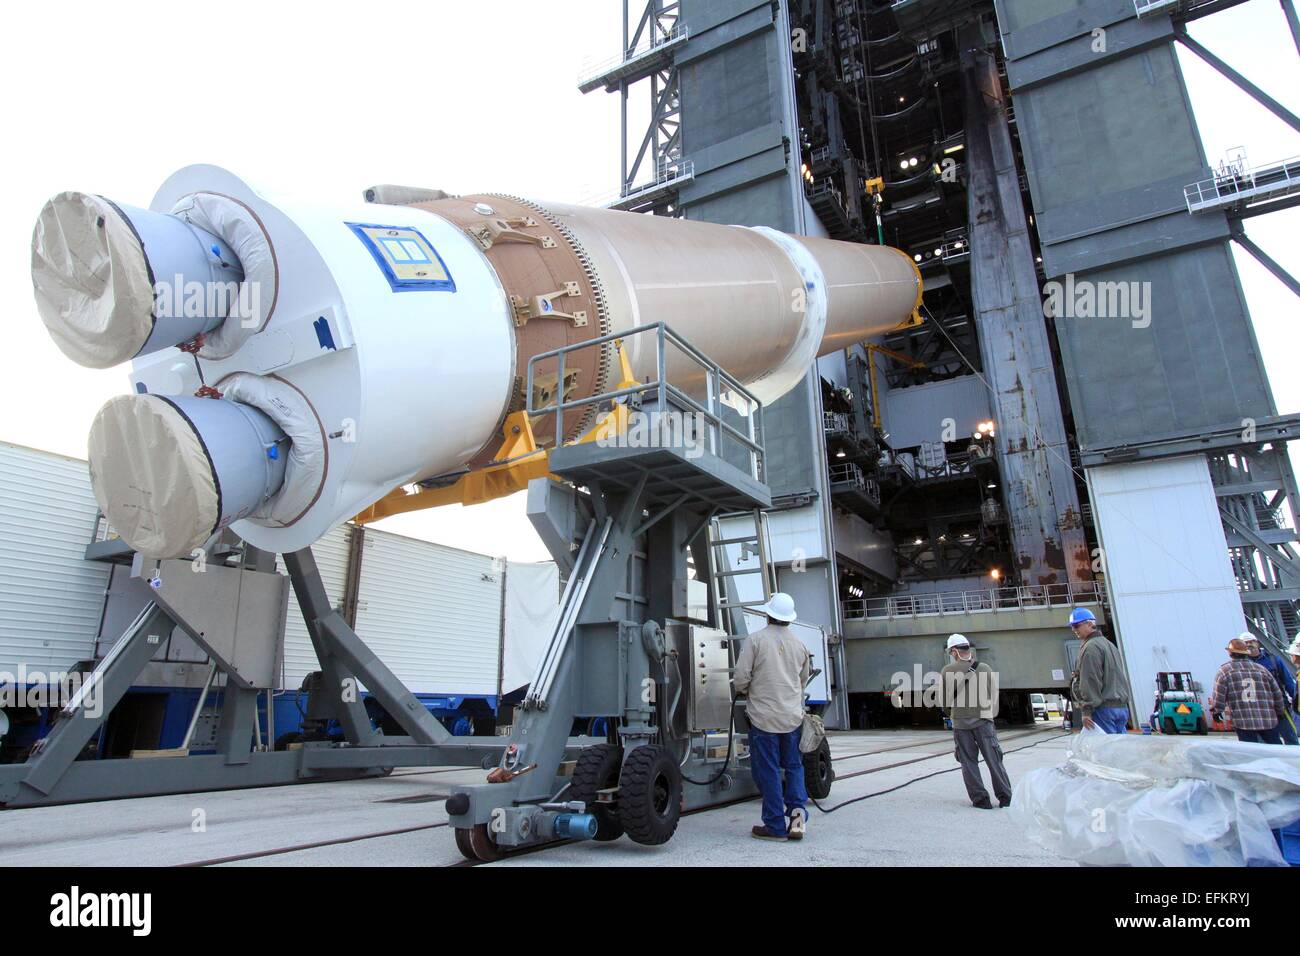 Bodenpersonal heben die United Launch Alliance Atlas V-Rakete tragen die Magnetospheric Multiscale Mission Satelliten in Position bei Space Launch Complex 41 4. Februar 2015 in Cape Canaveral, Florida aufgehoben wird. Stockfoto